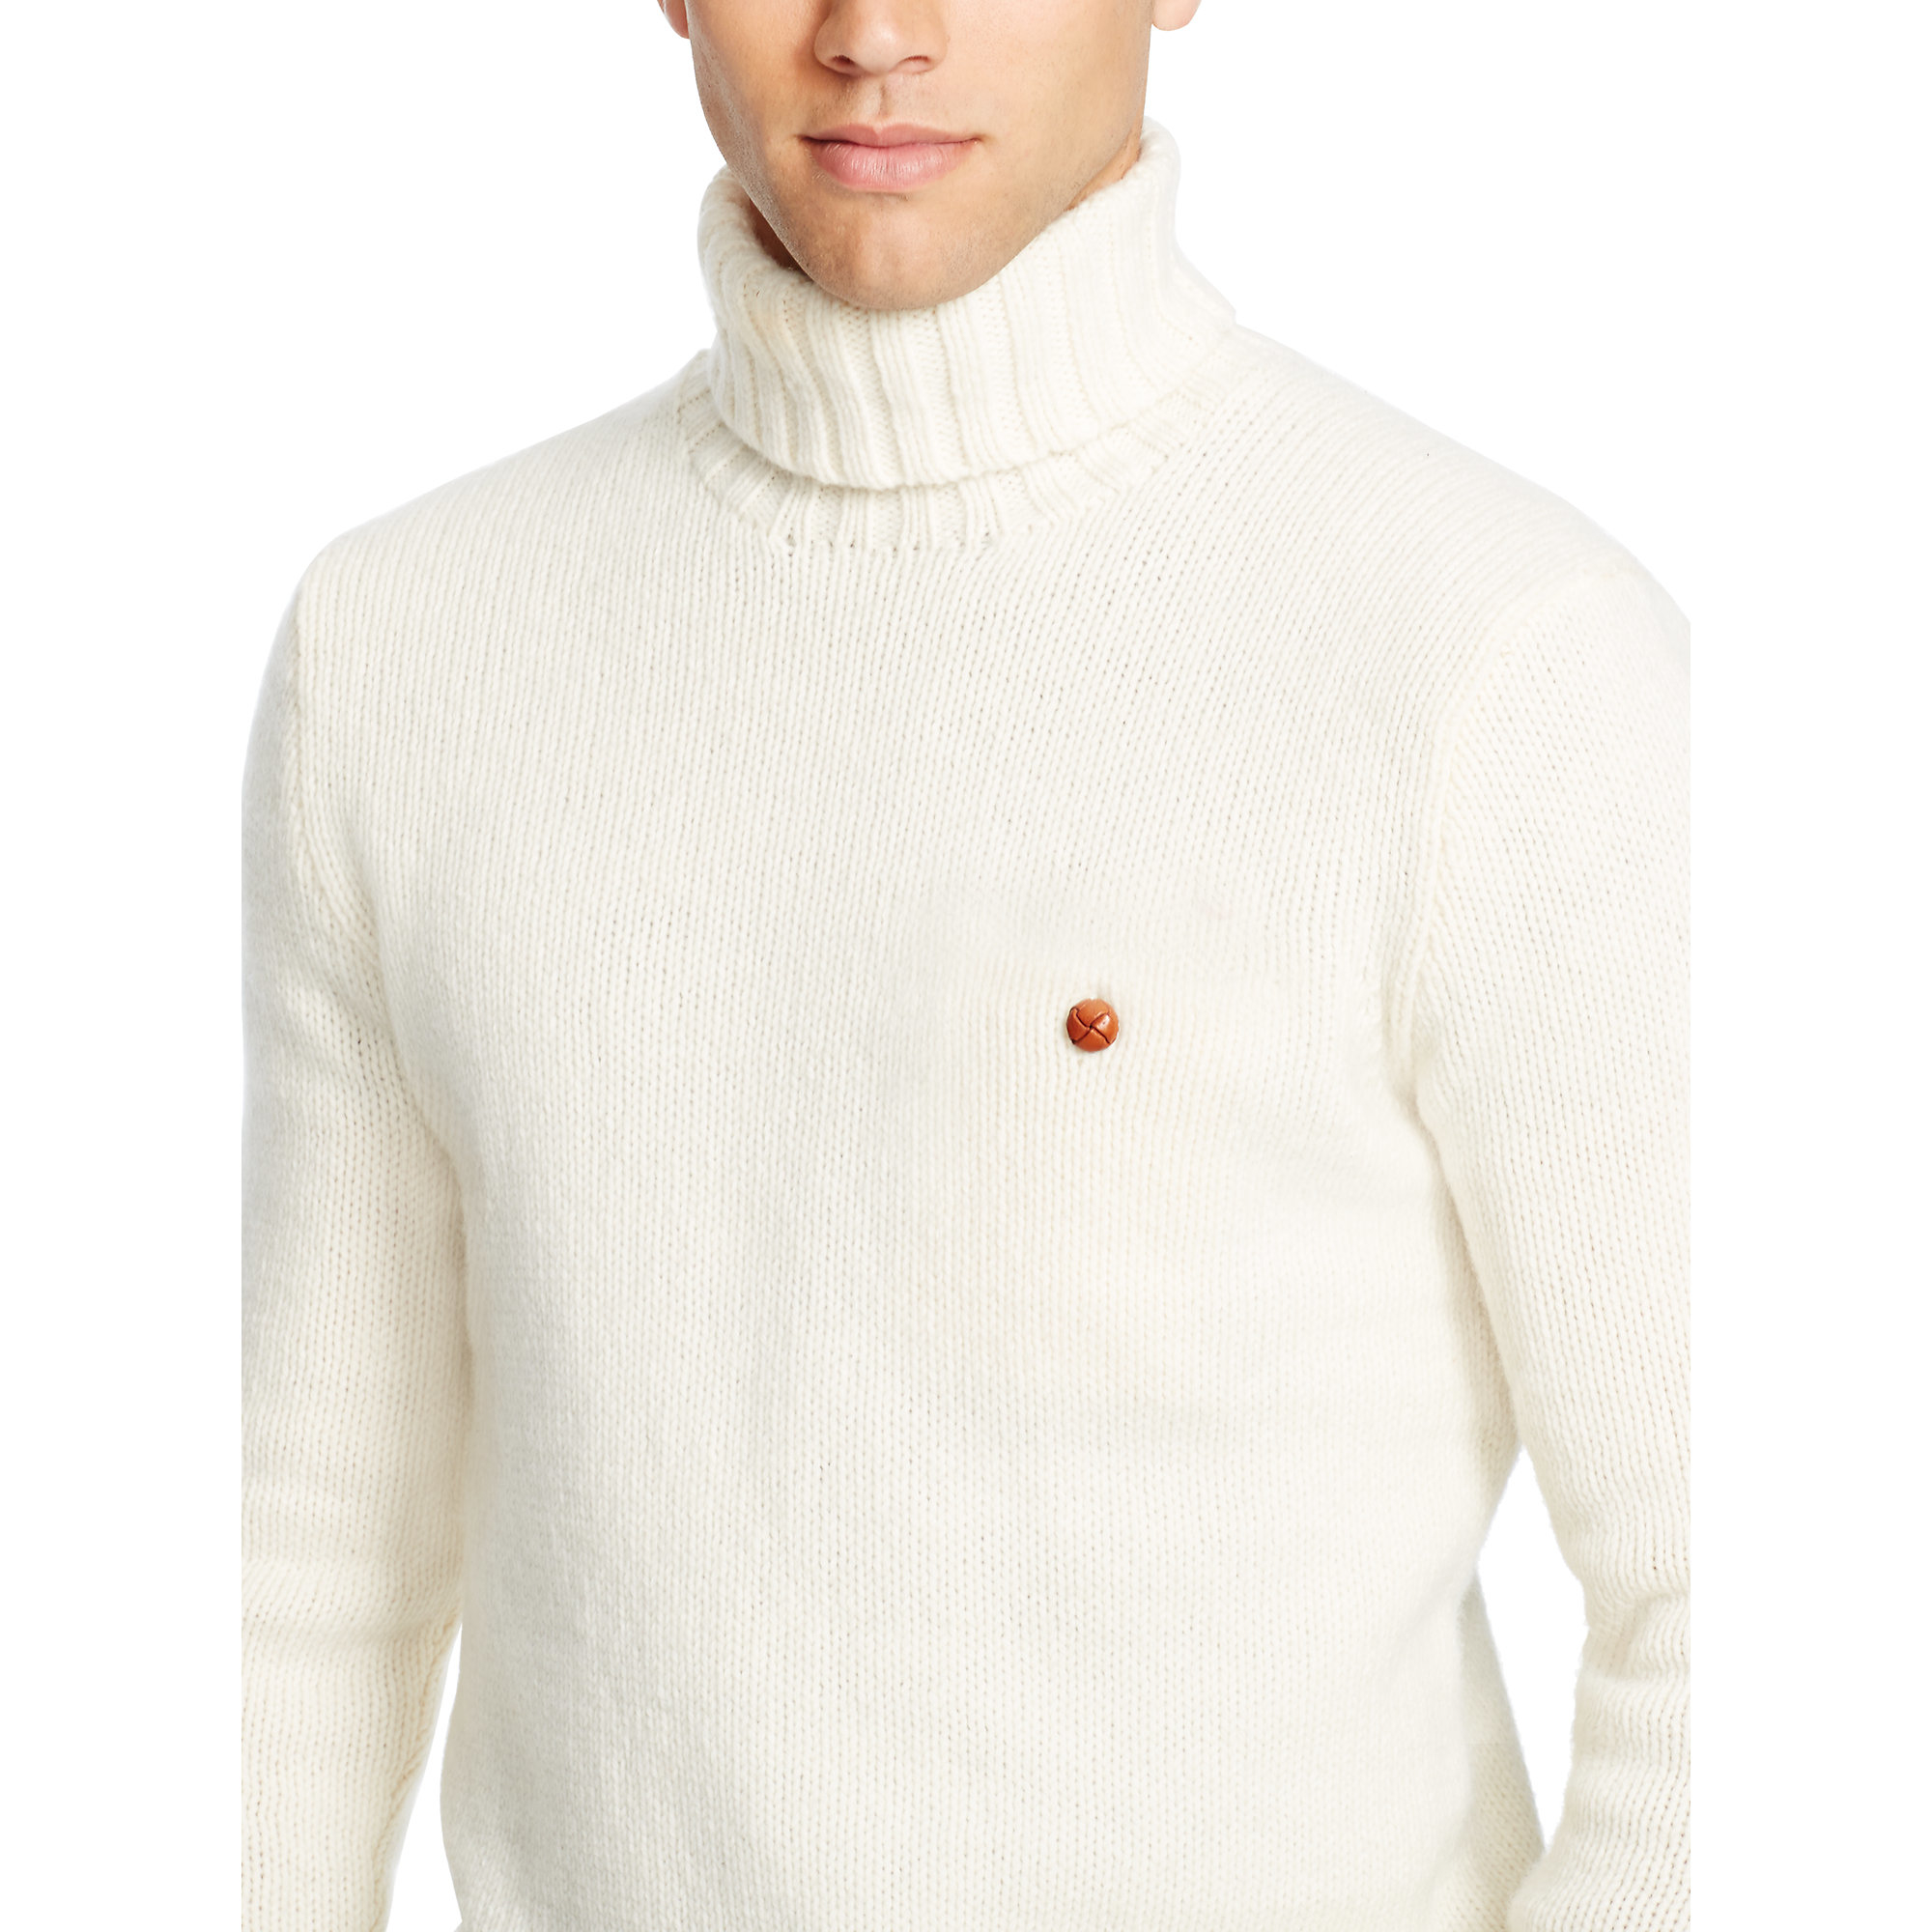 Lyst - Polo Ralph Lauren Merino Wool Turtleneck Sweater in Natural for Men